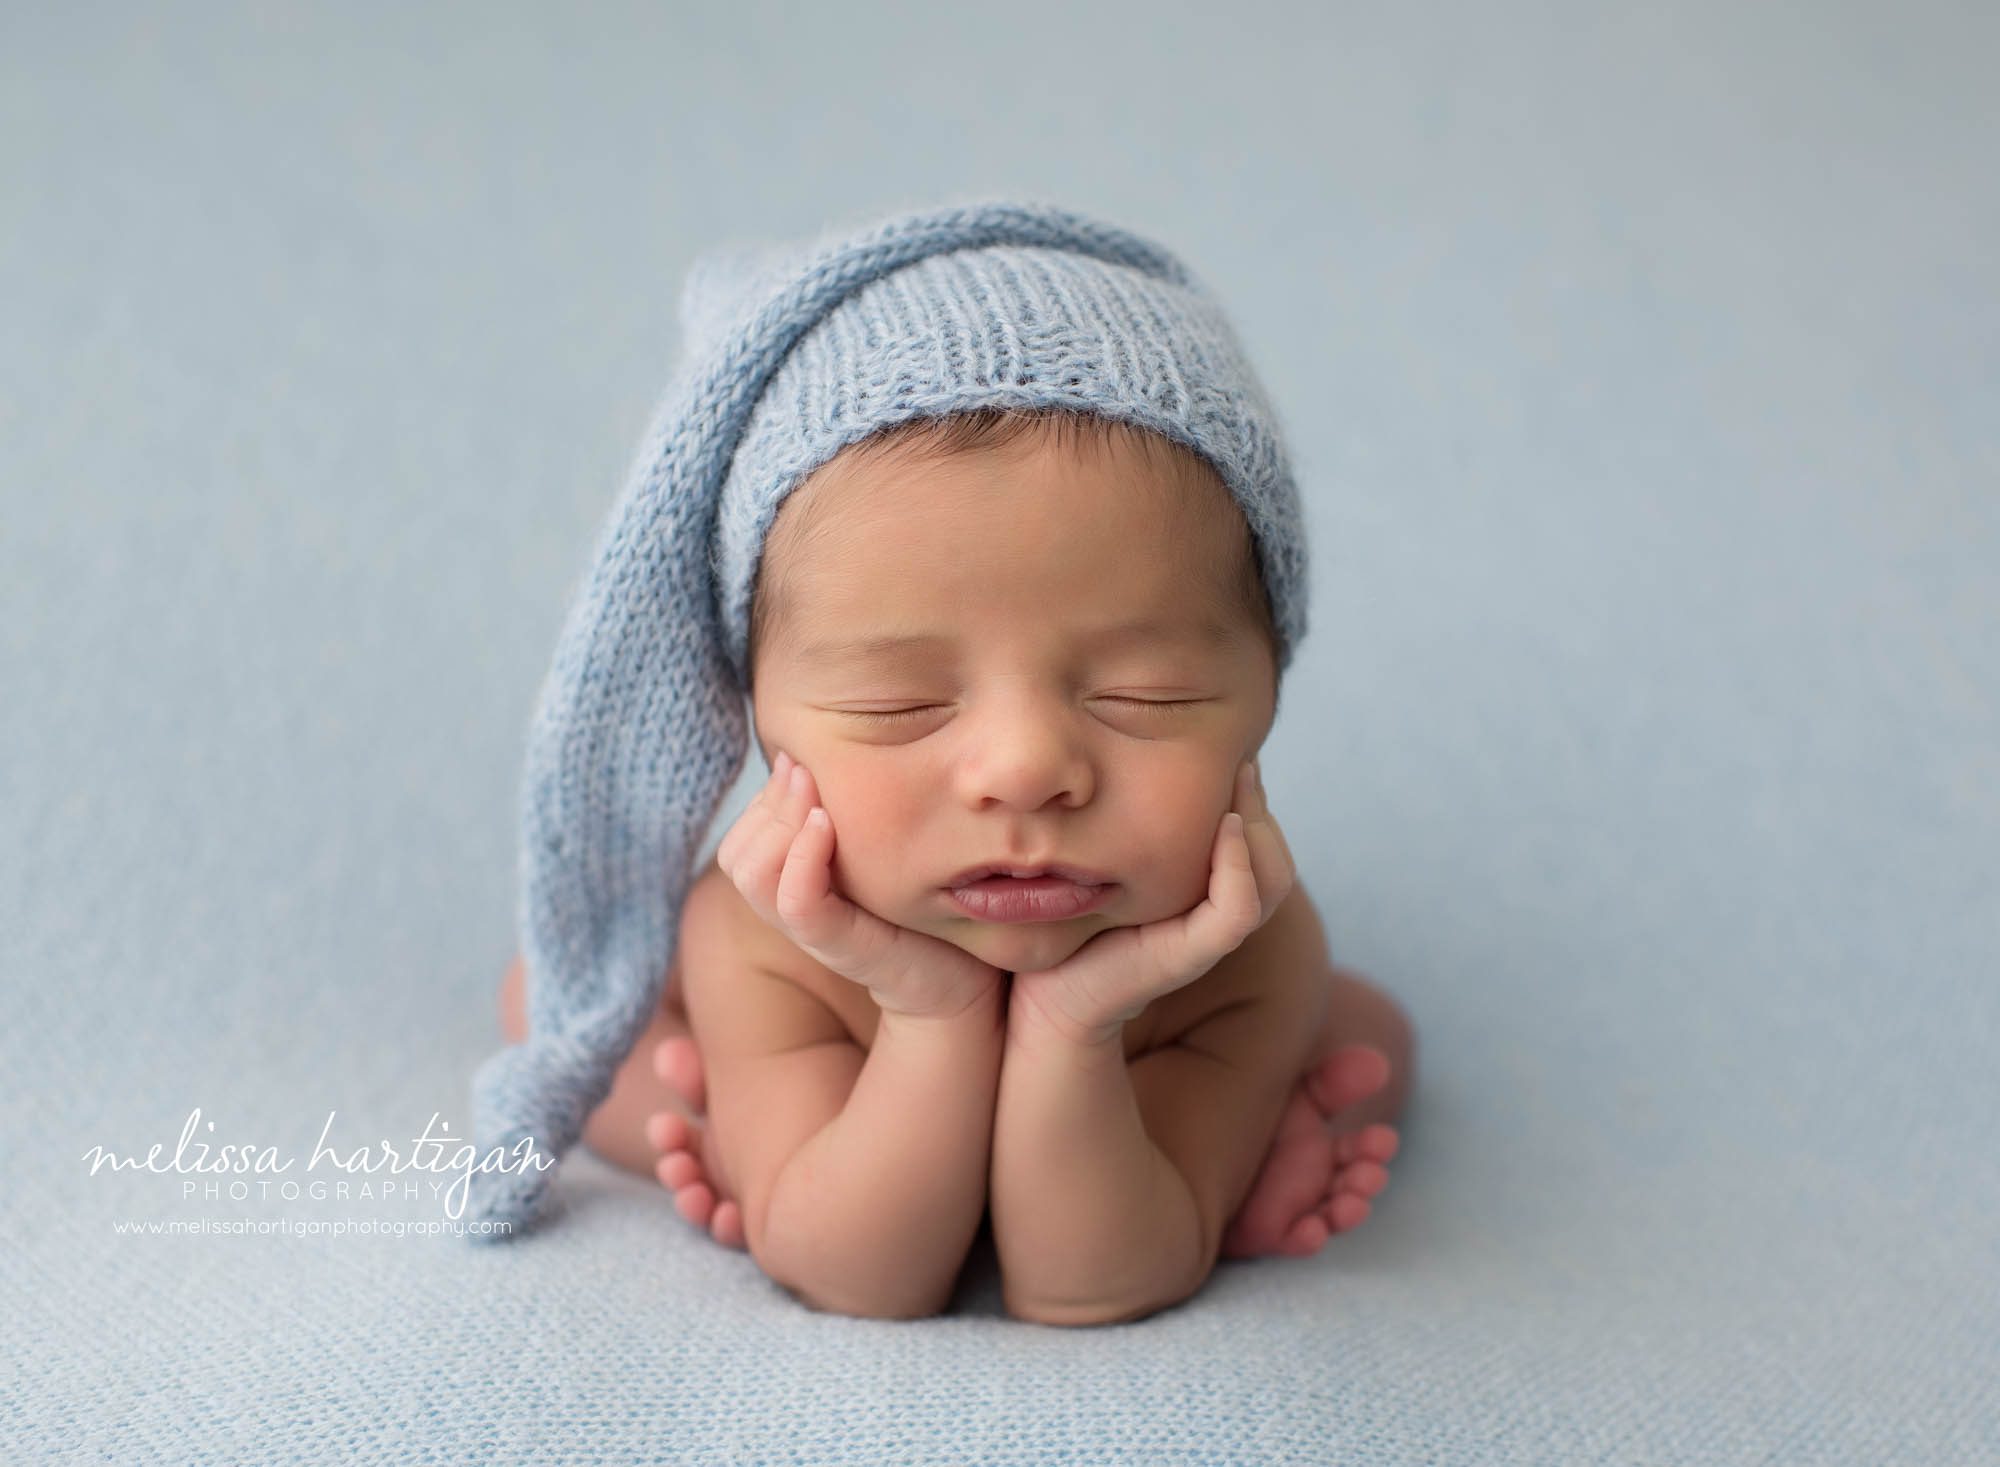 newborn baby boy posed froggy pose wearing knitted blue sleepy cap